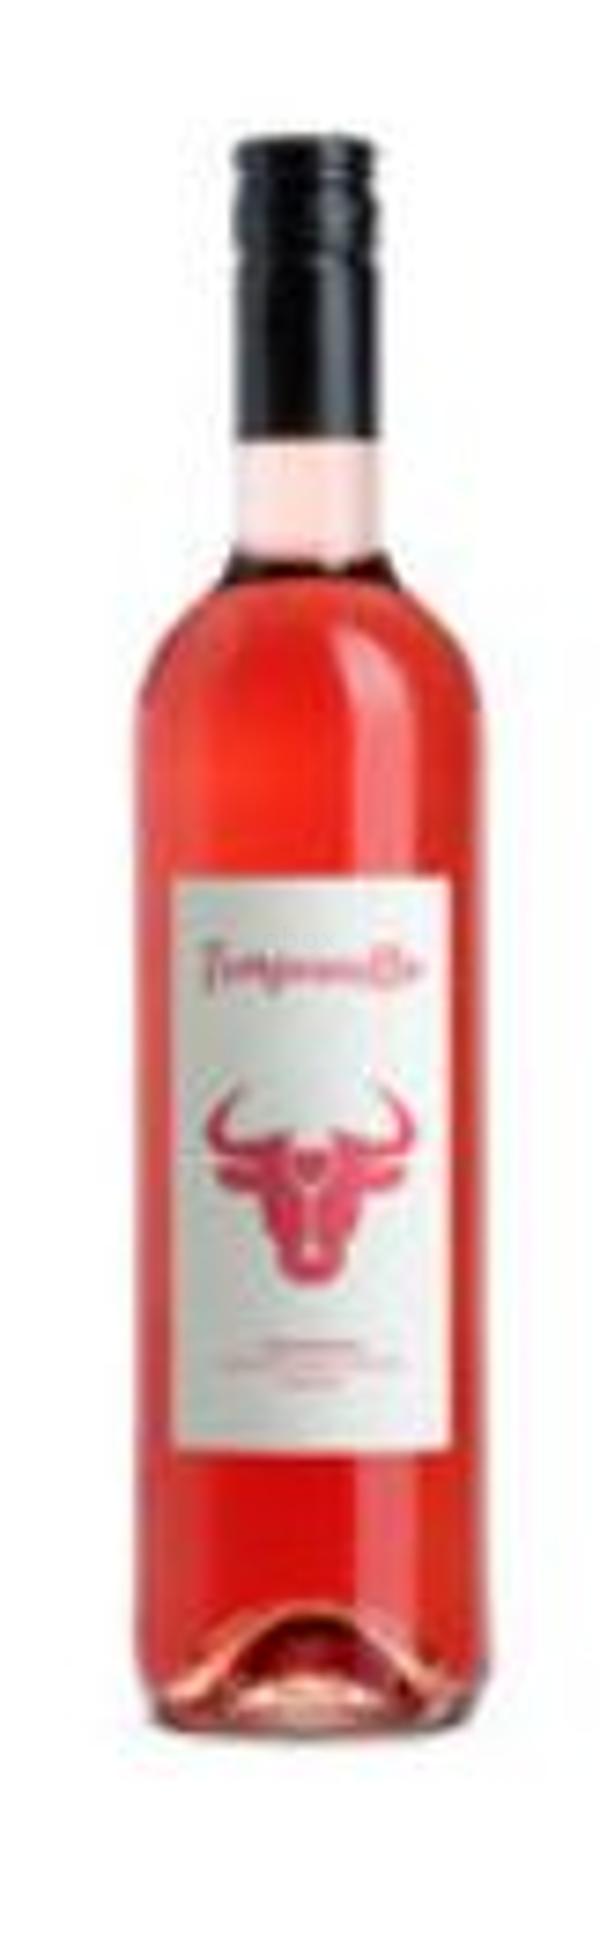 Produktfoto zu Tempranillo rosé, 0,75l, halbtrocken